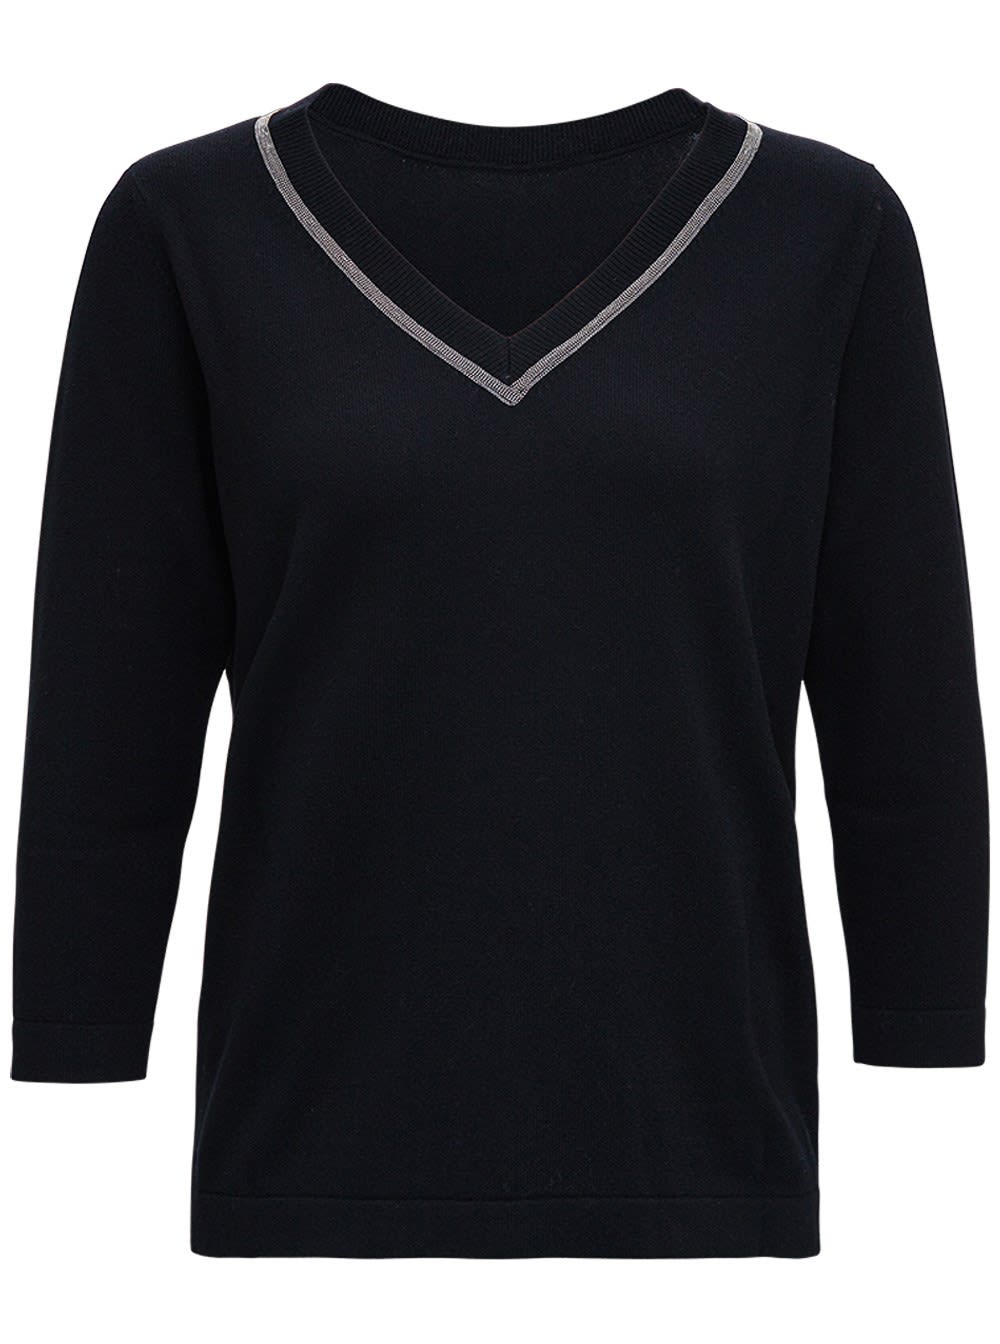 Fabiana Filippi Black Wool And Silk Sweater With Shiny Detail